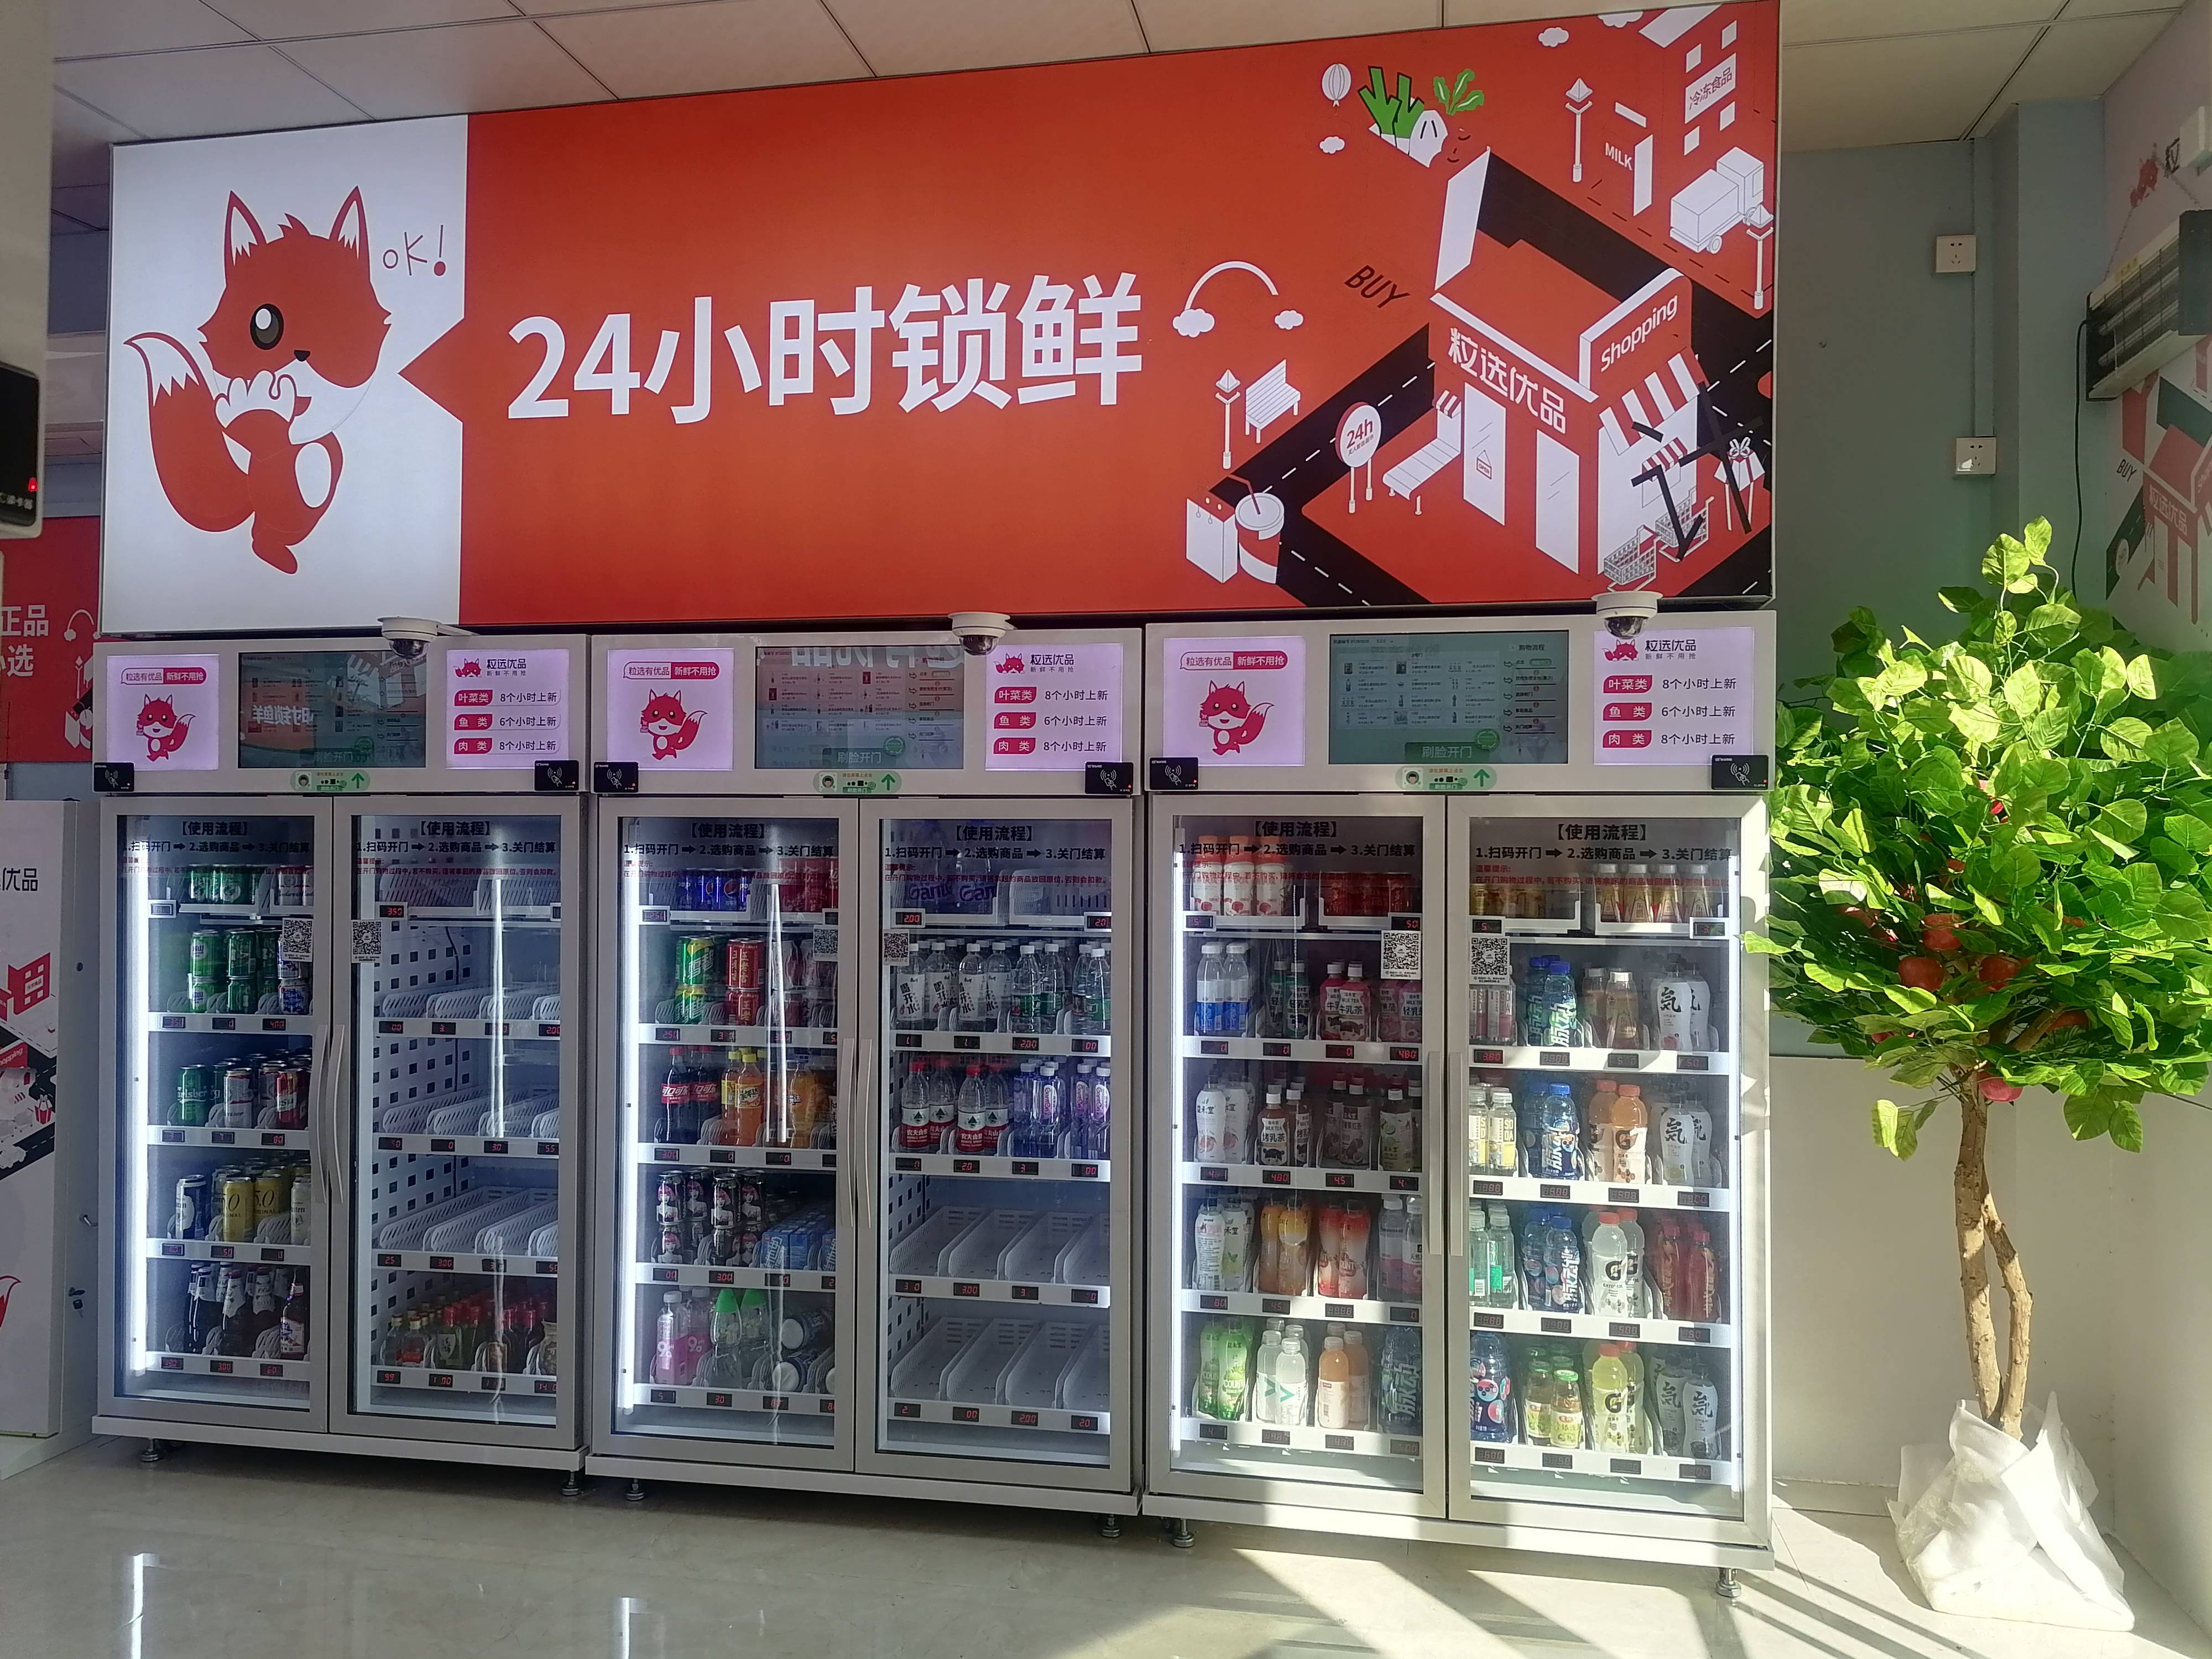 smart fridge vending machine in the unmanned supermarket